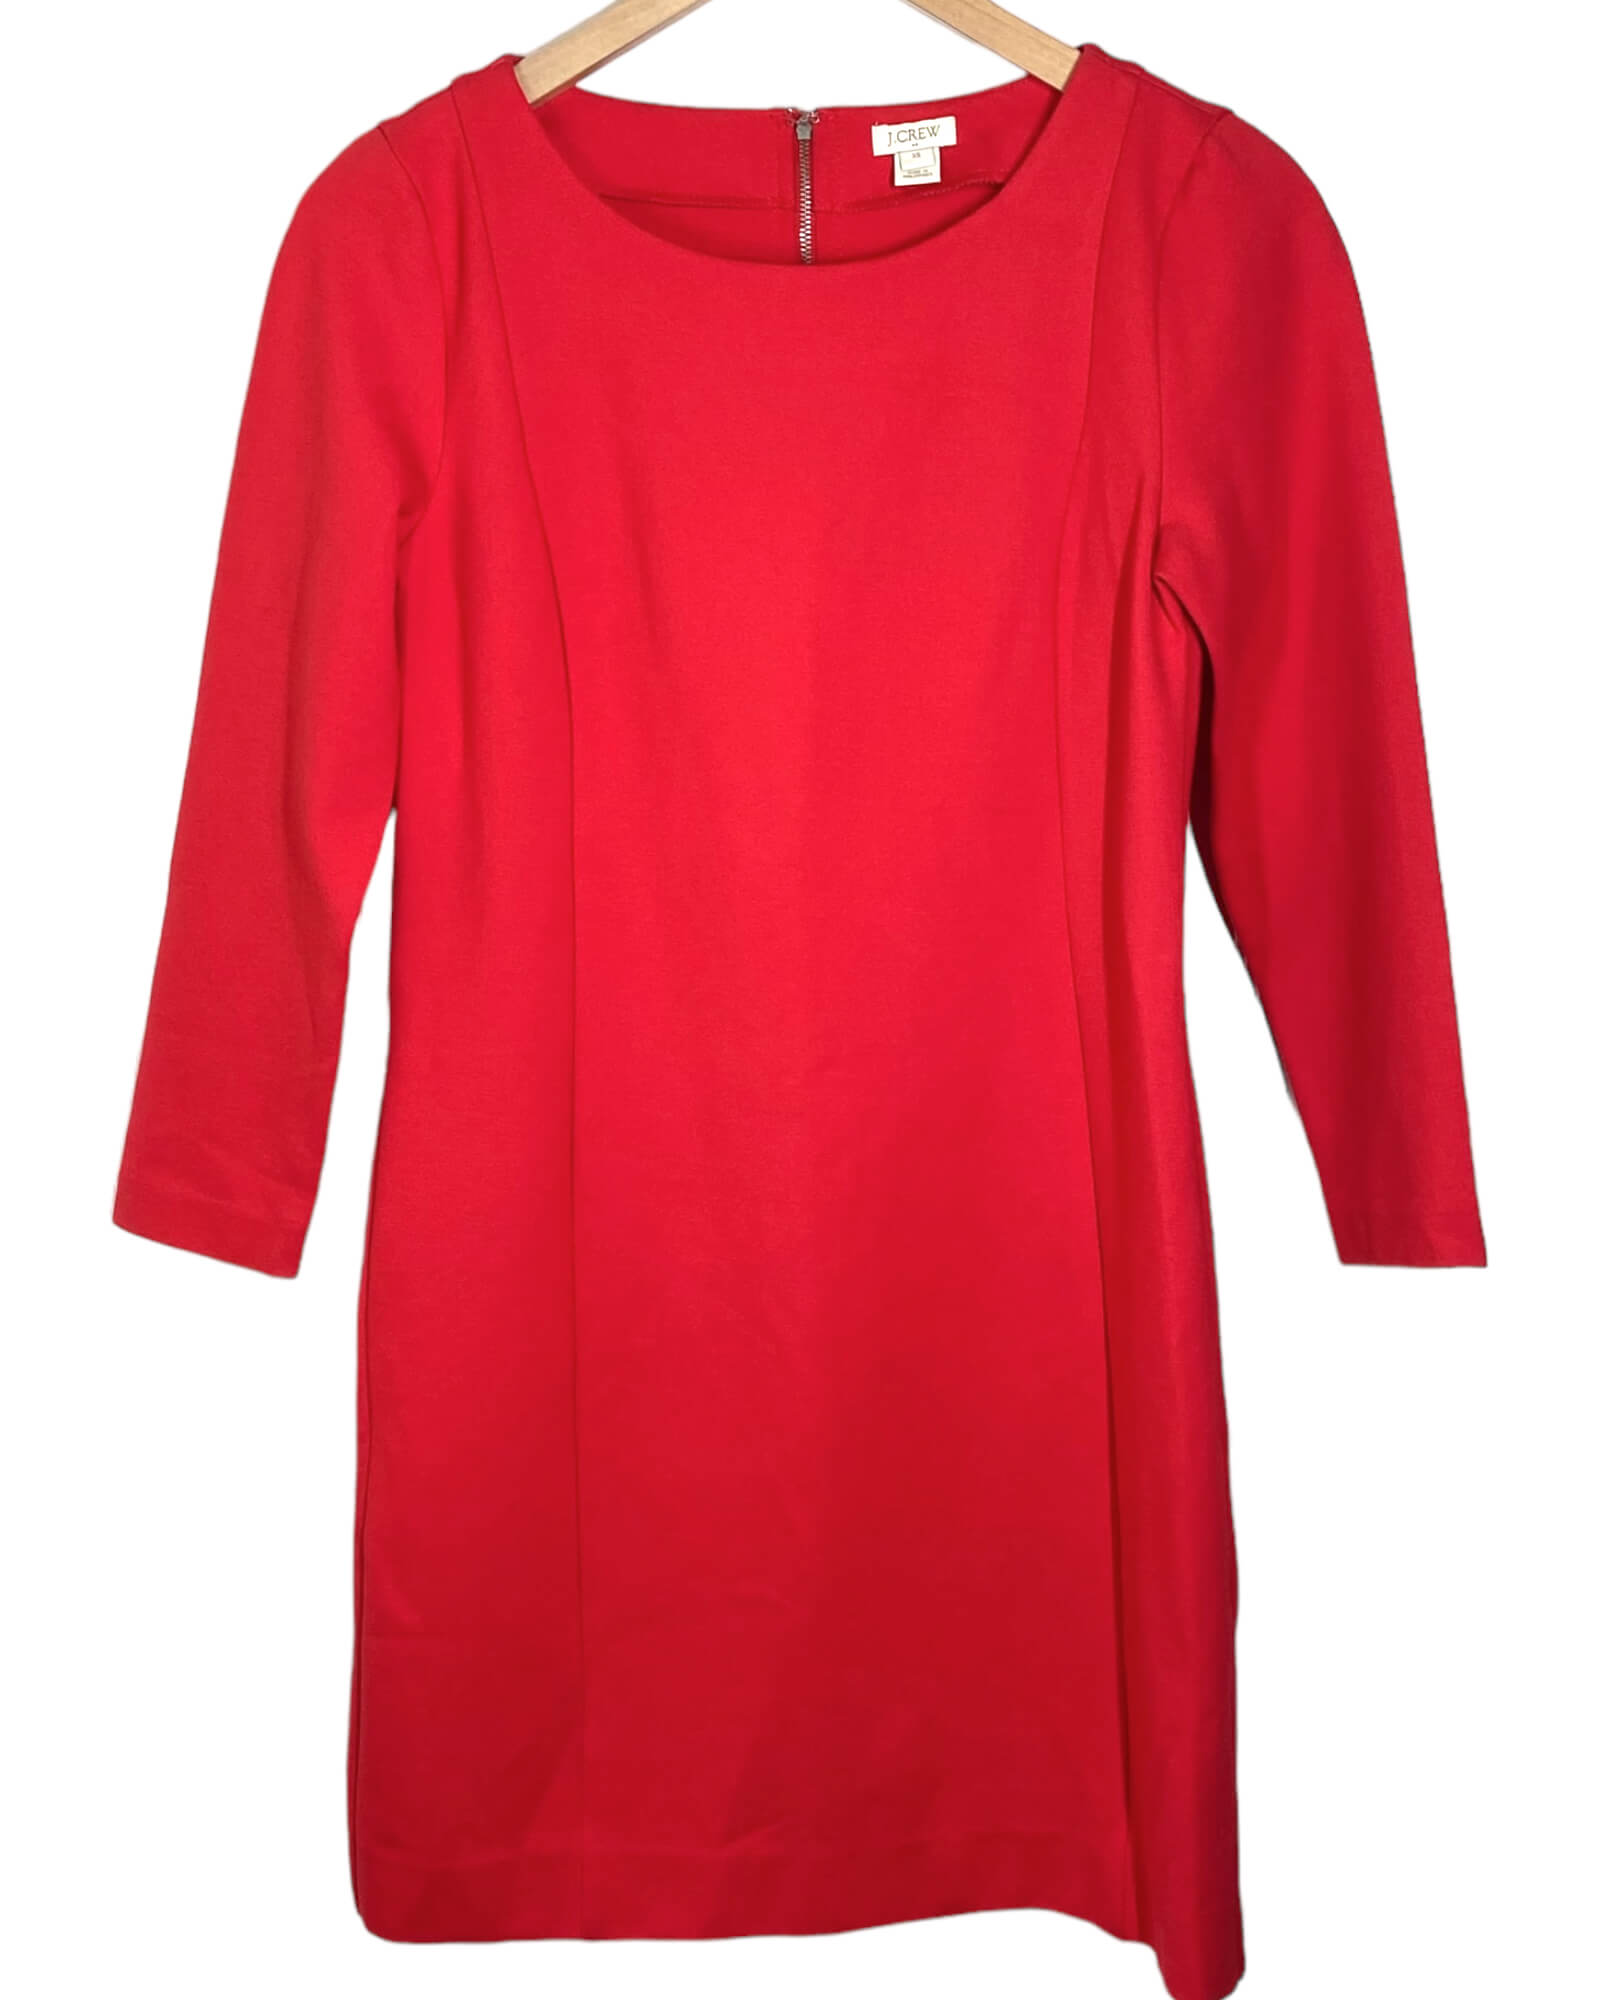 Bright Spring J.CREW red long sleeve sheath dress